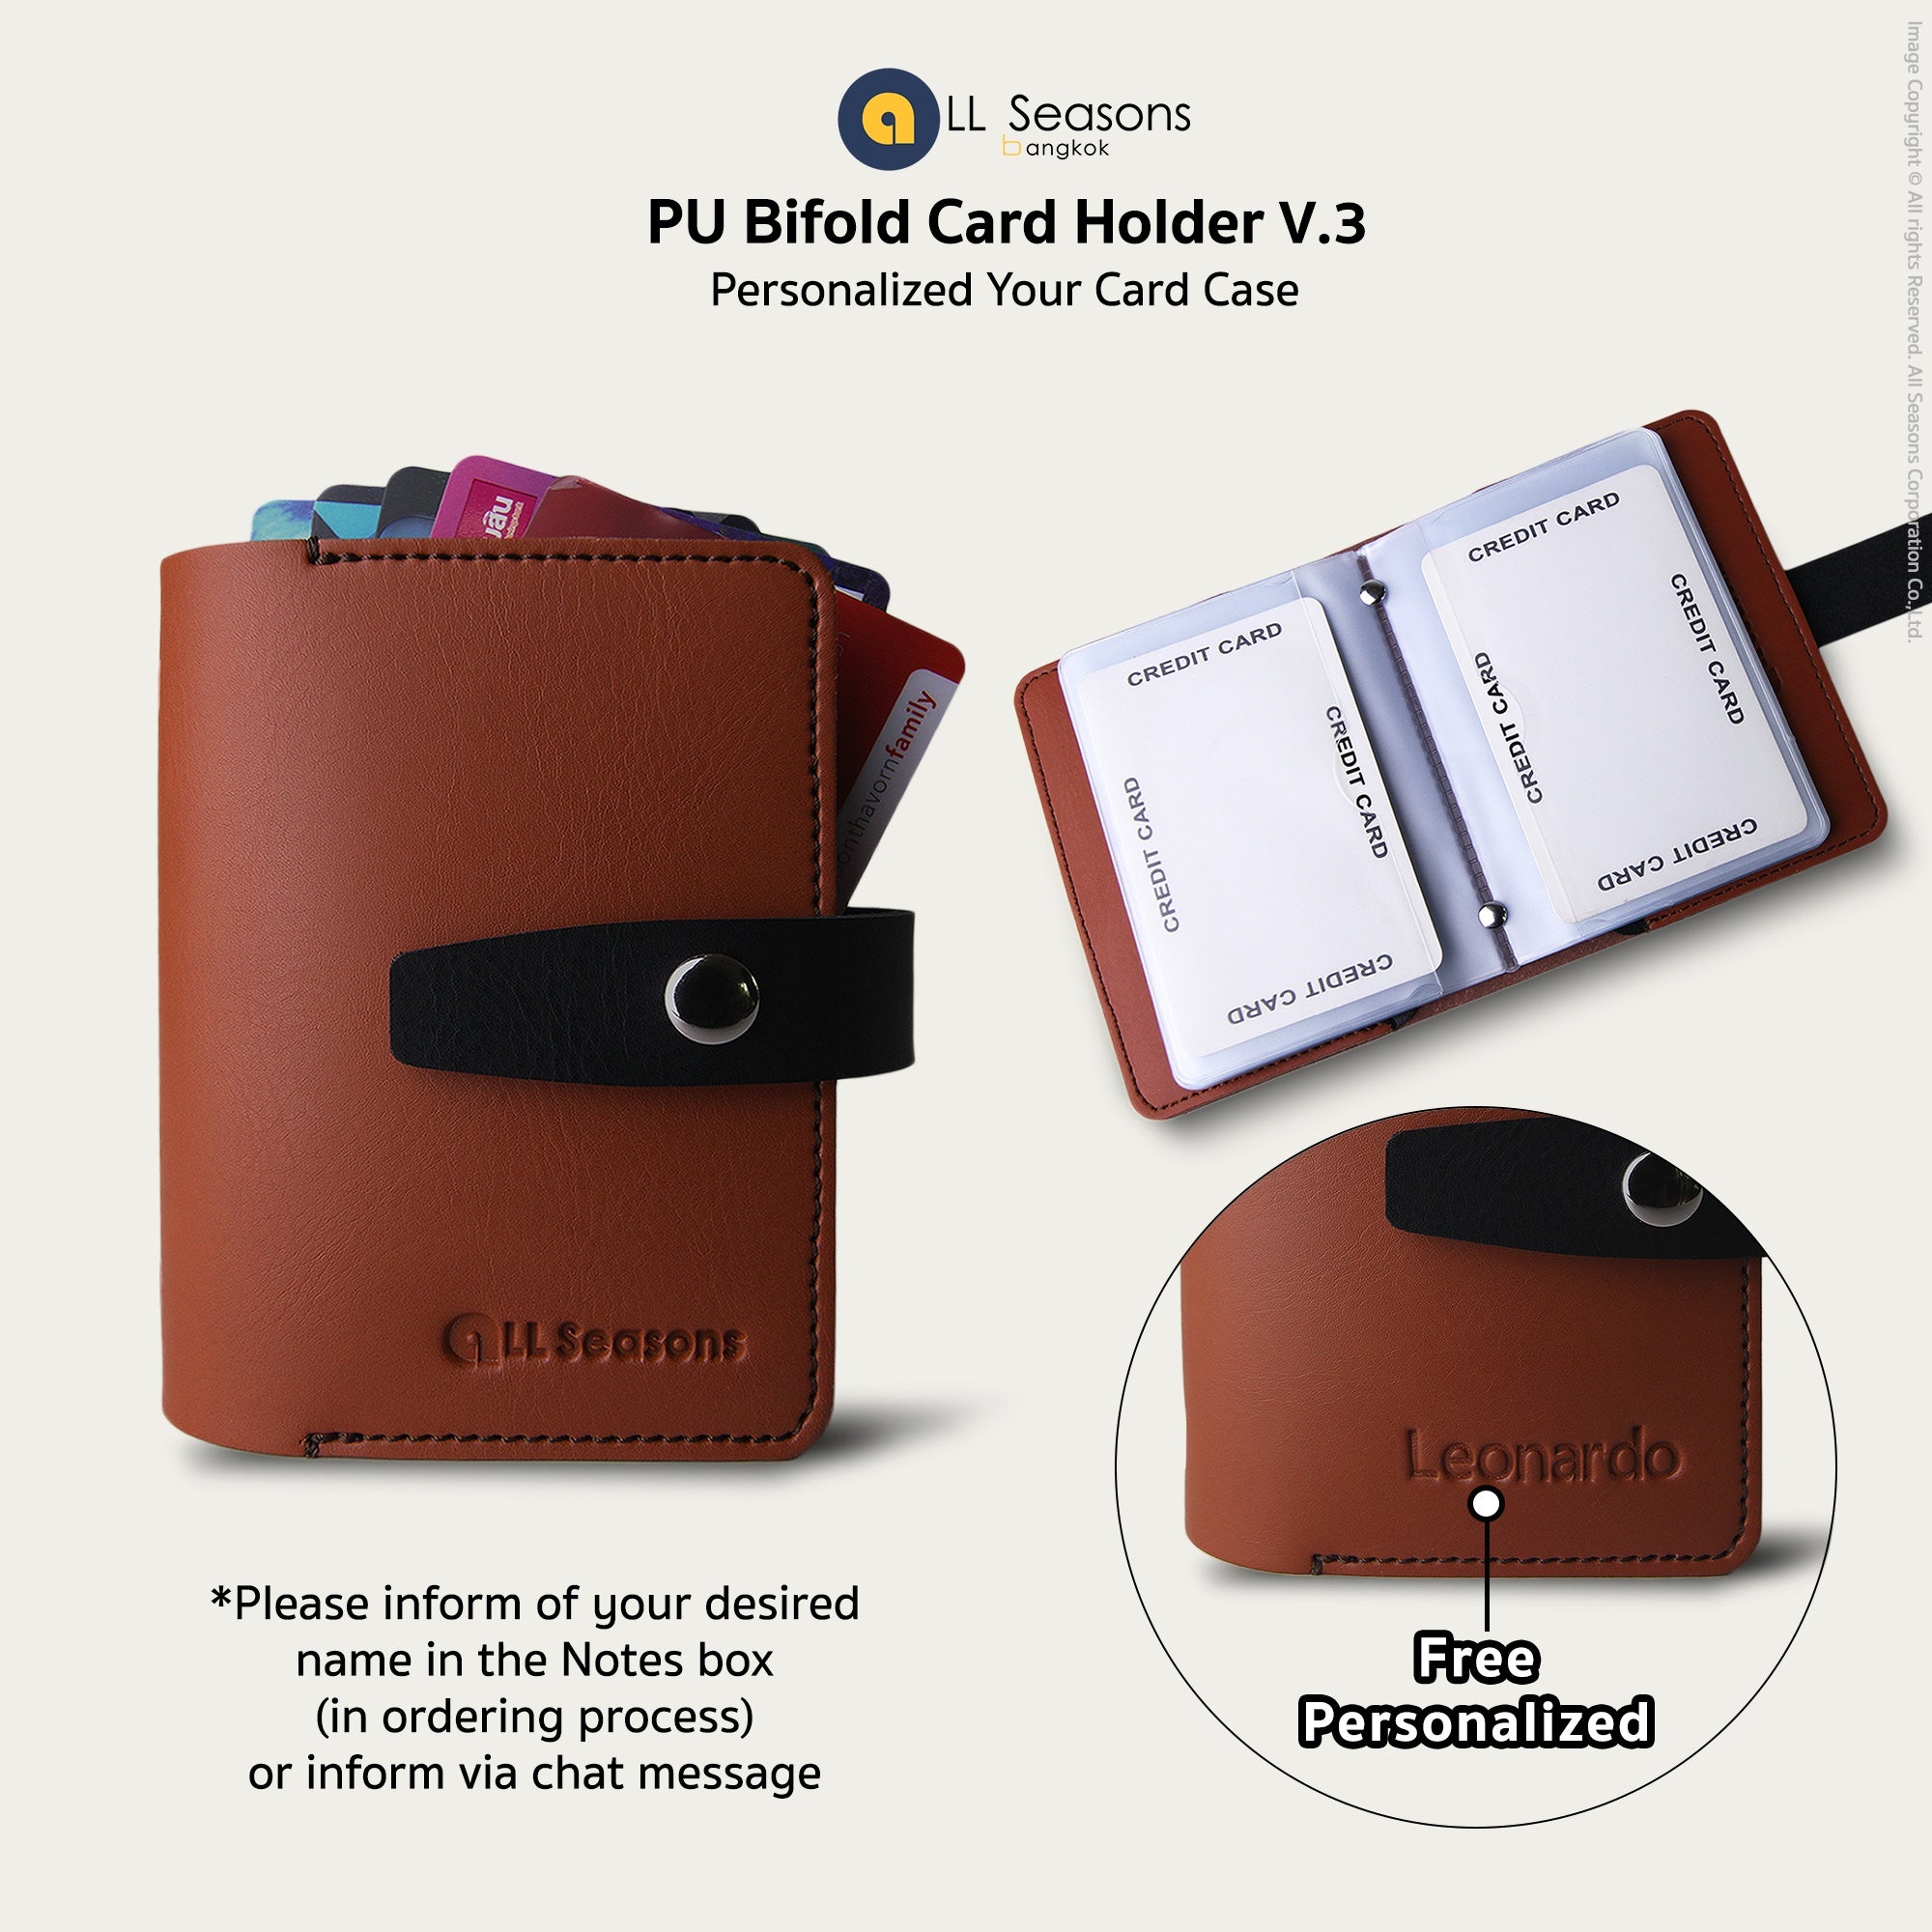 Personalized PU Bifold Card Holder V.3